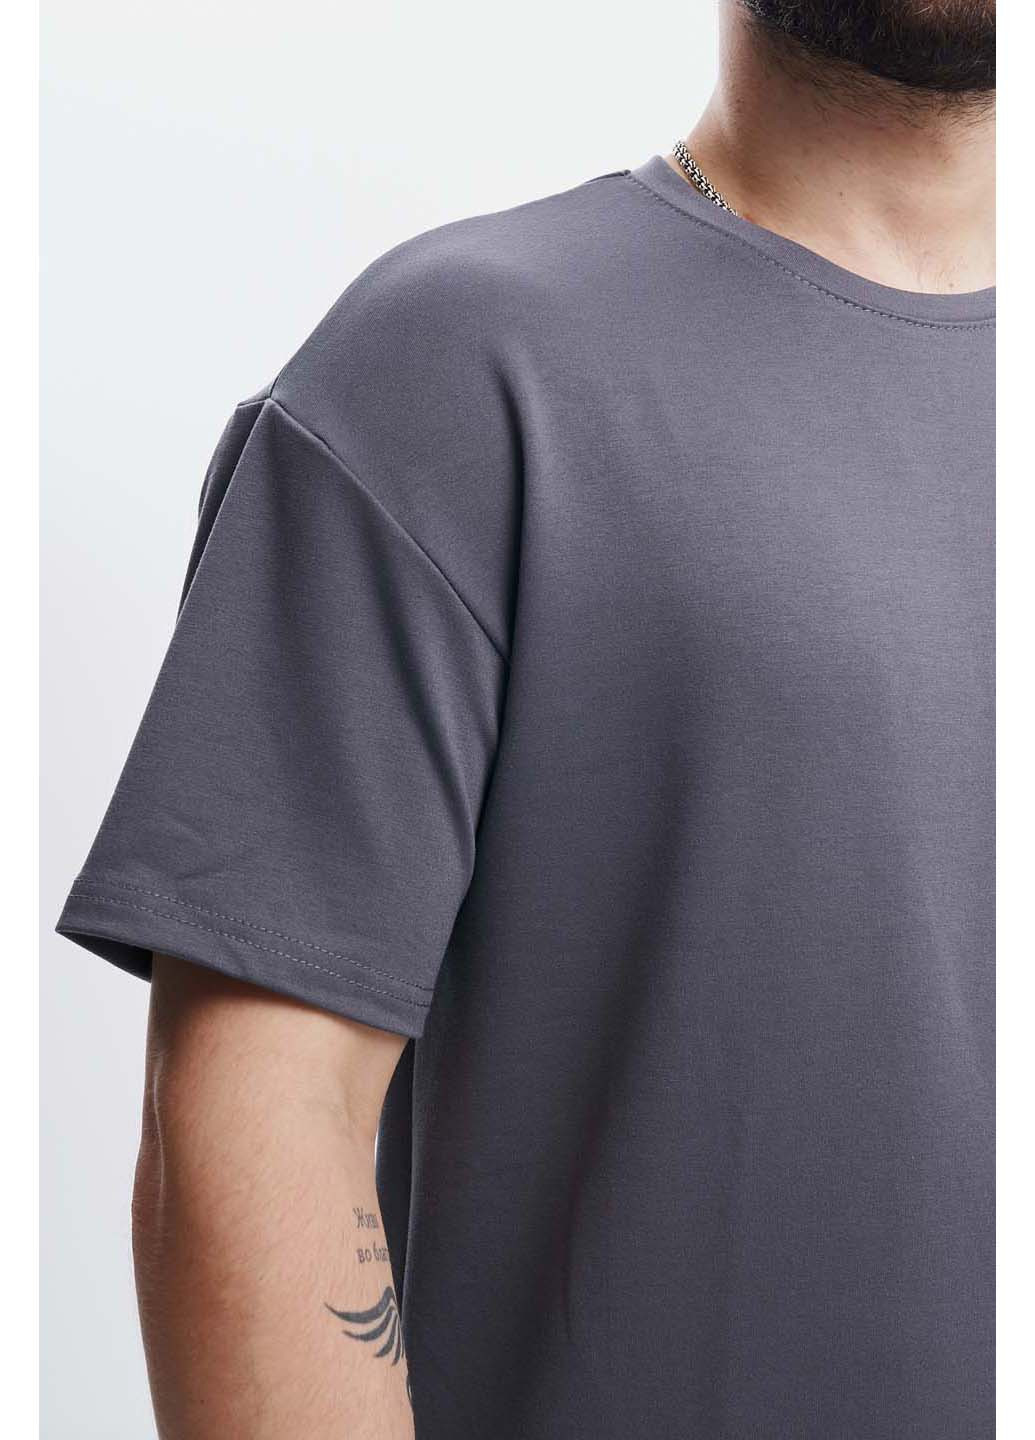 Темно-серый демисезонный комплект player футболка + шорты Intruder